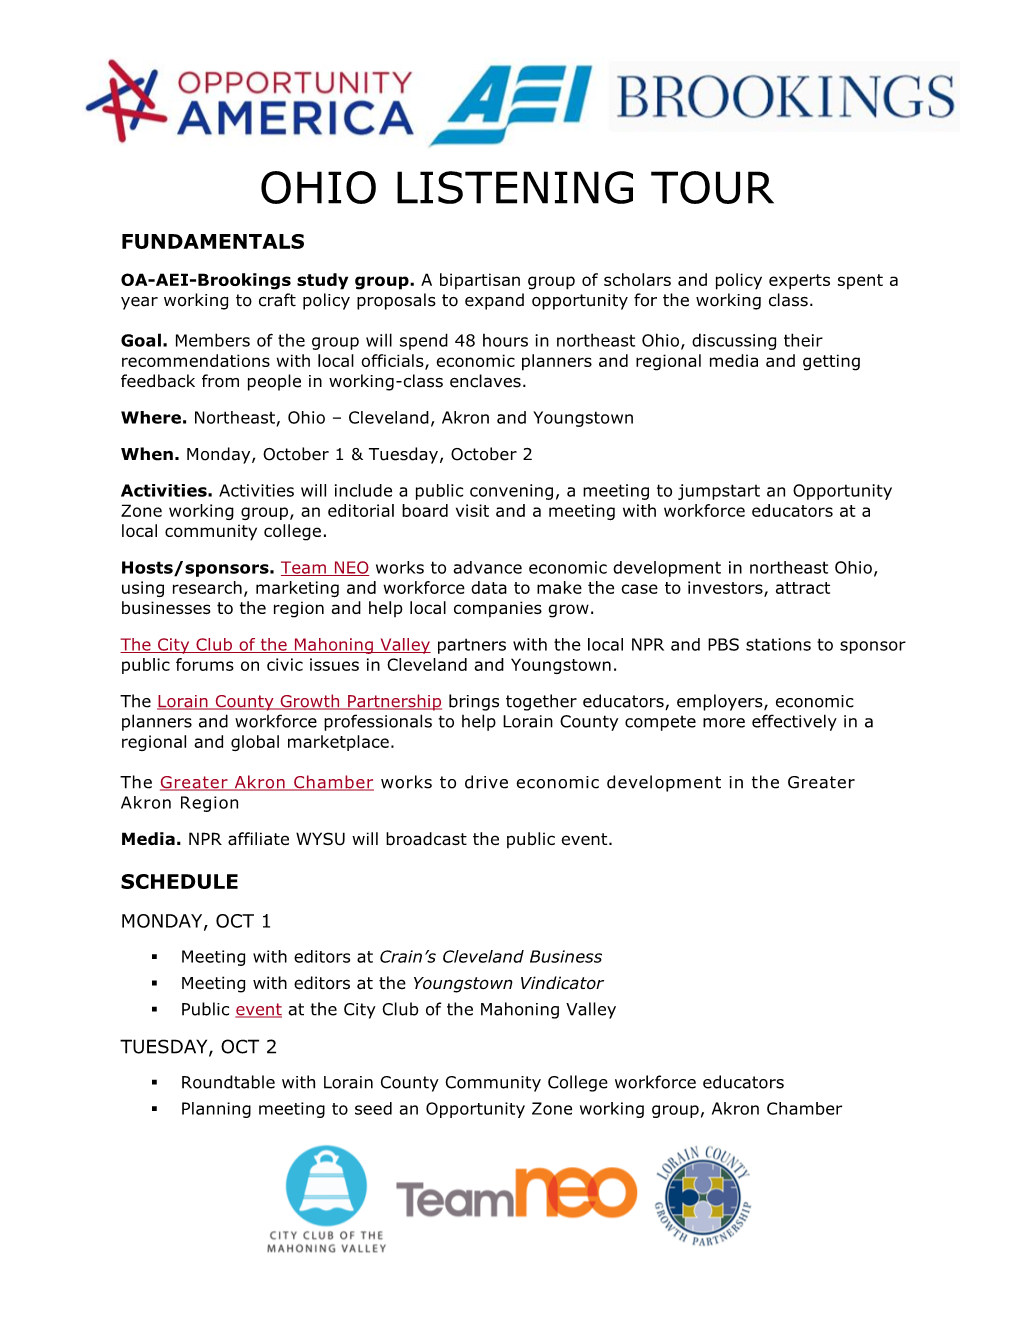 Ohio Listening Tour